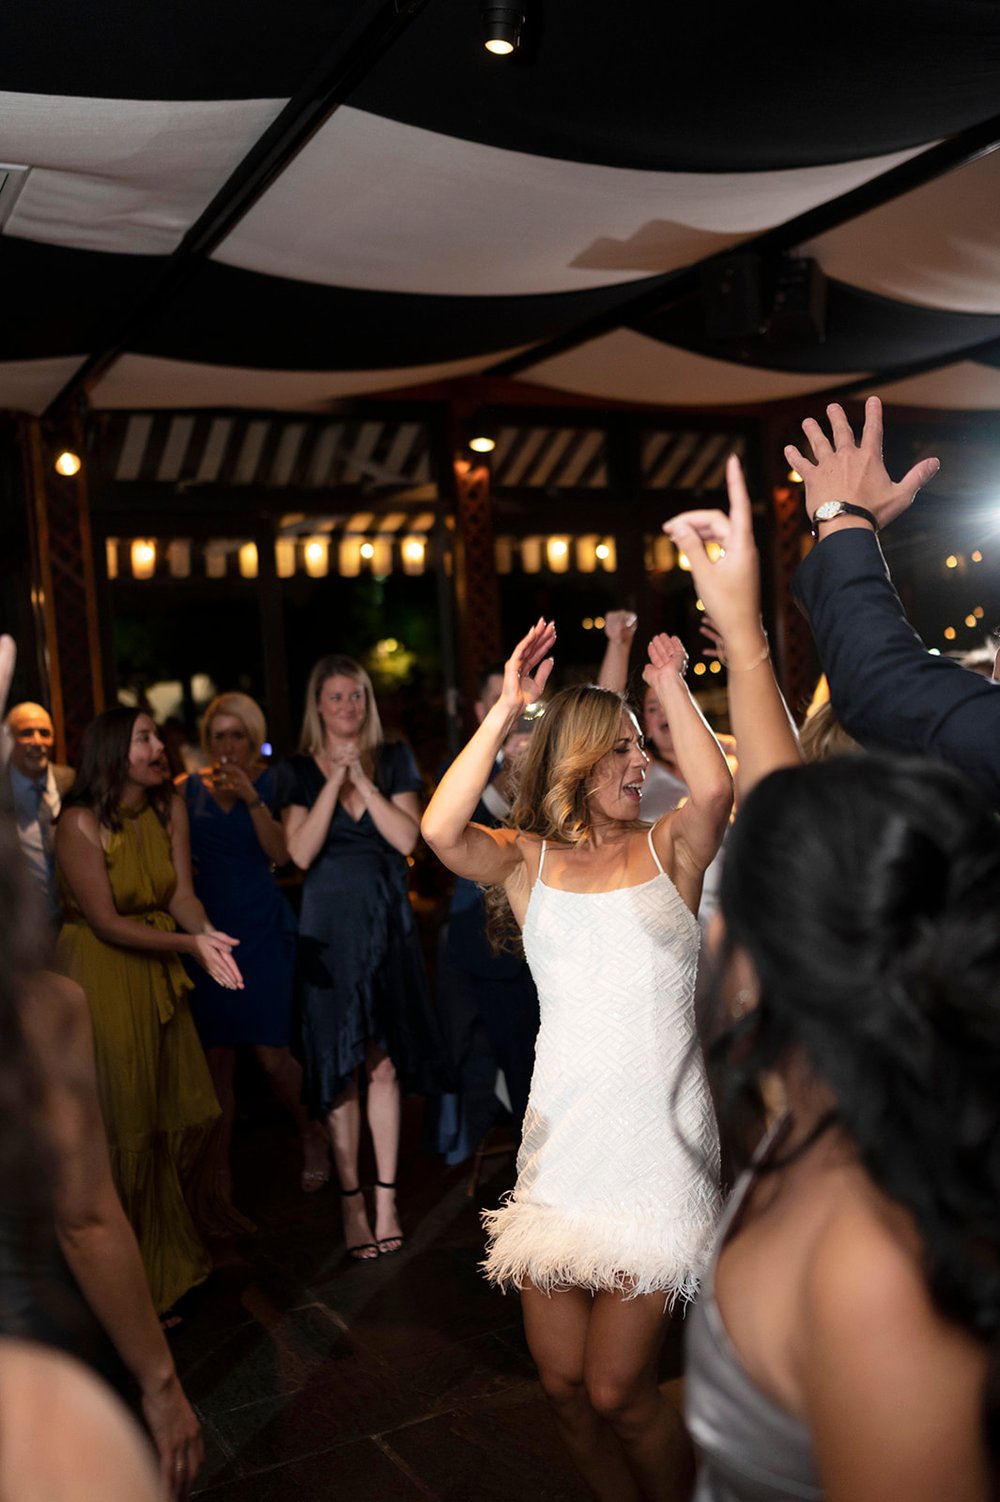  dancing photos at an Elegant Wedding Reception at The River Cafe | Wedding day detail photos 